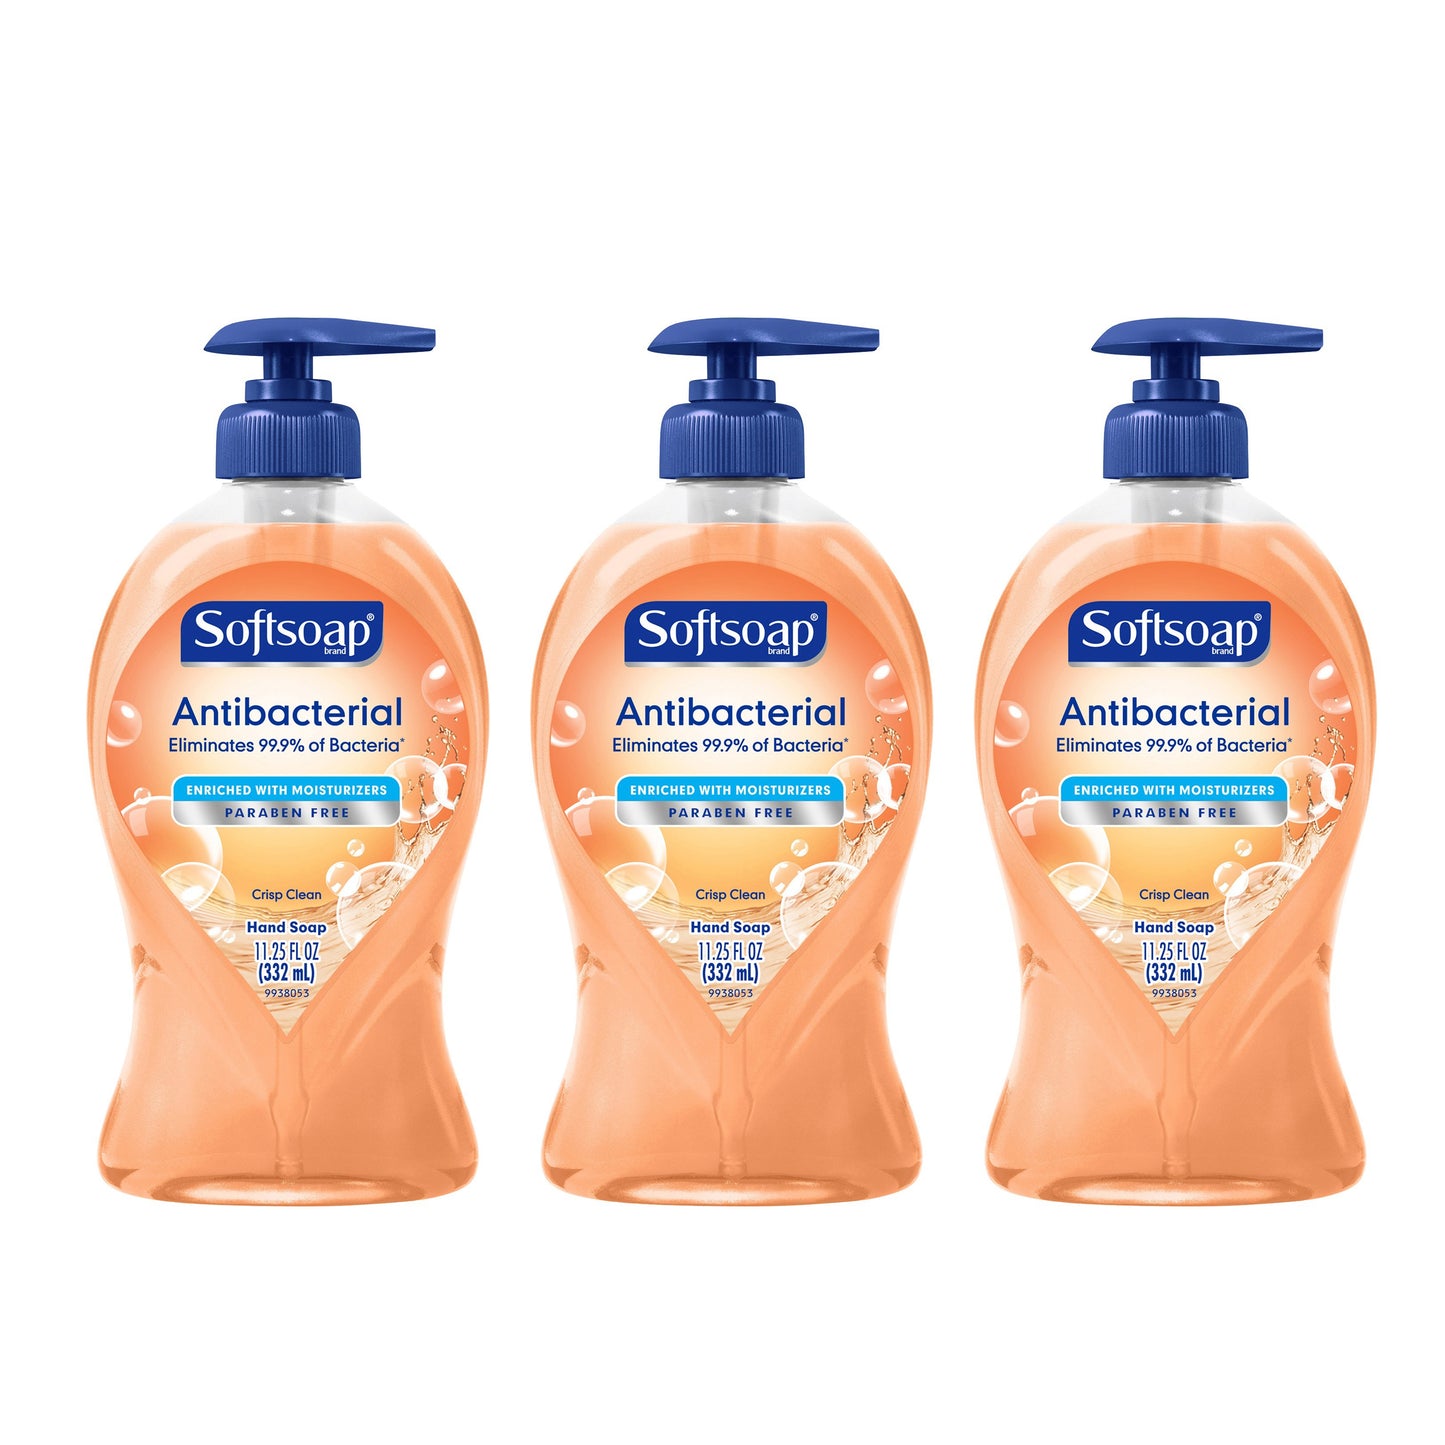 Softsoap Antibacterial Hand Soap Crisp Clean 11.25 oz 332 ml